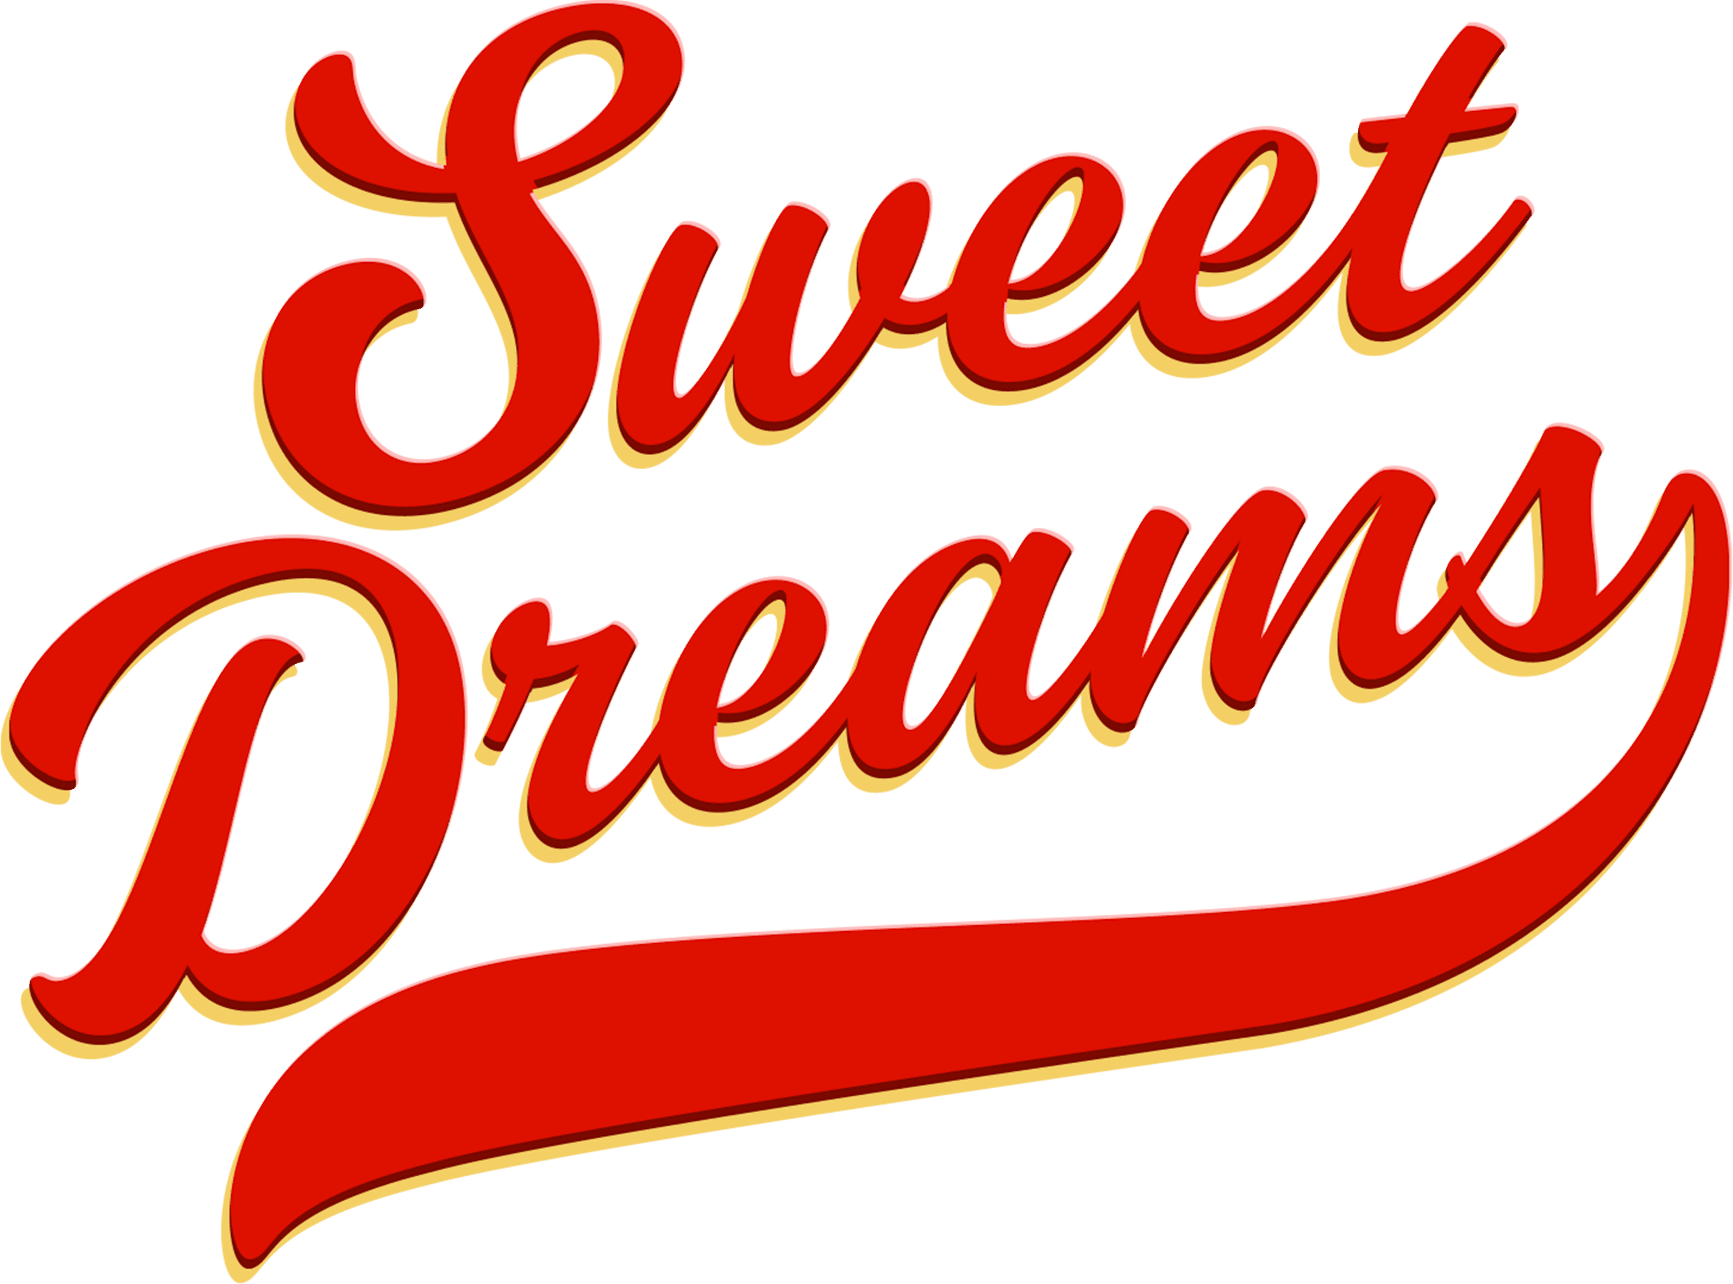 Sweet Dreams logo